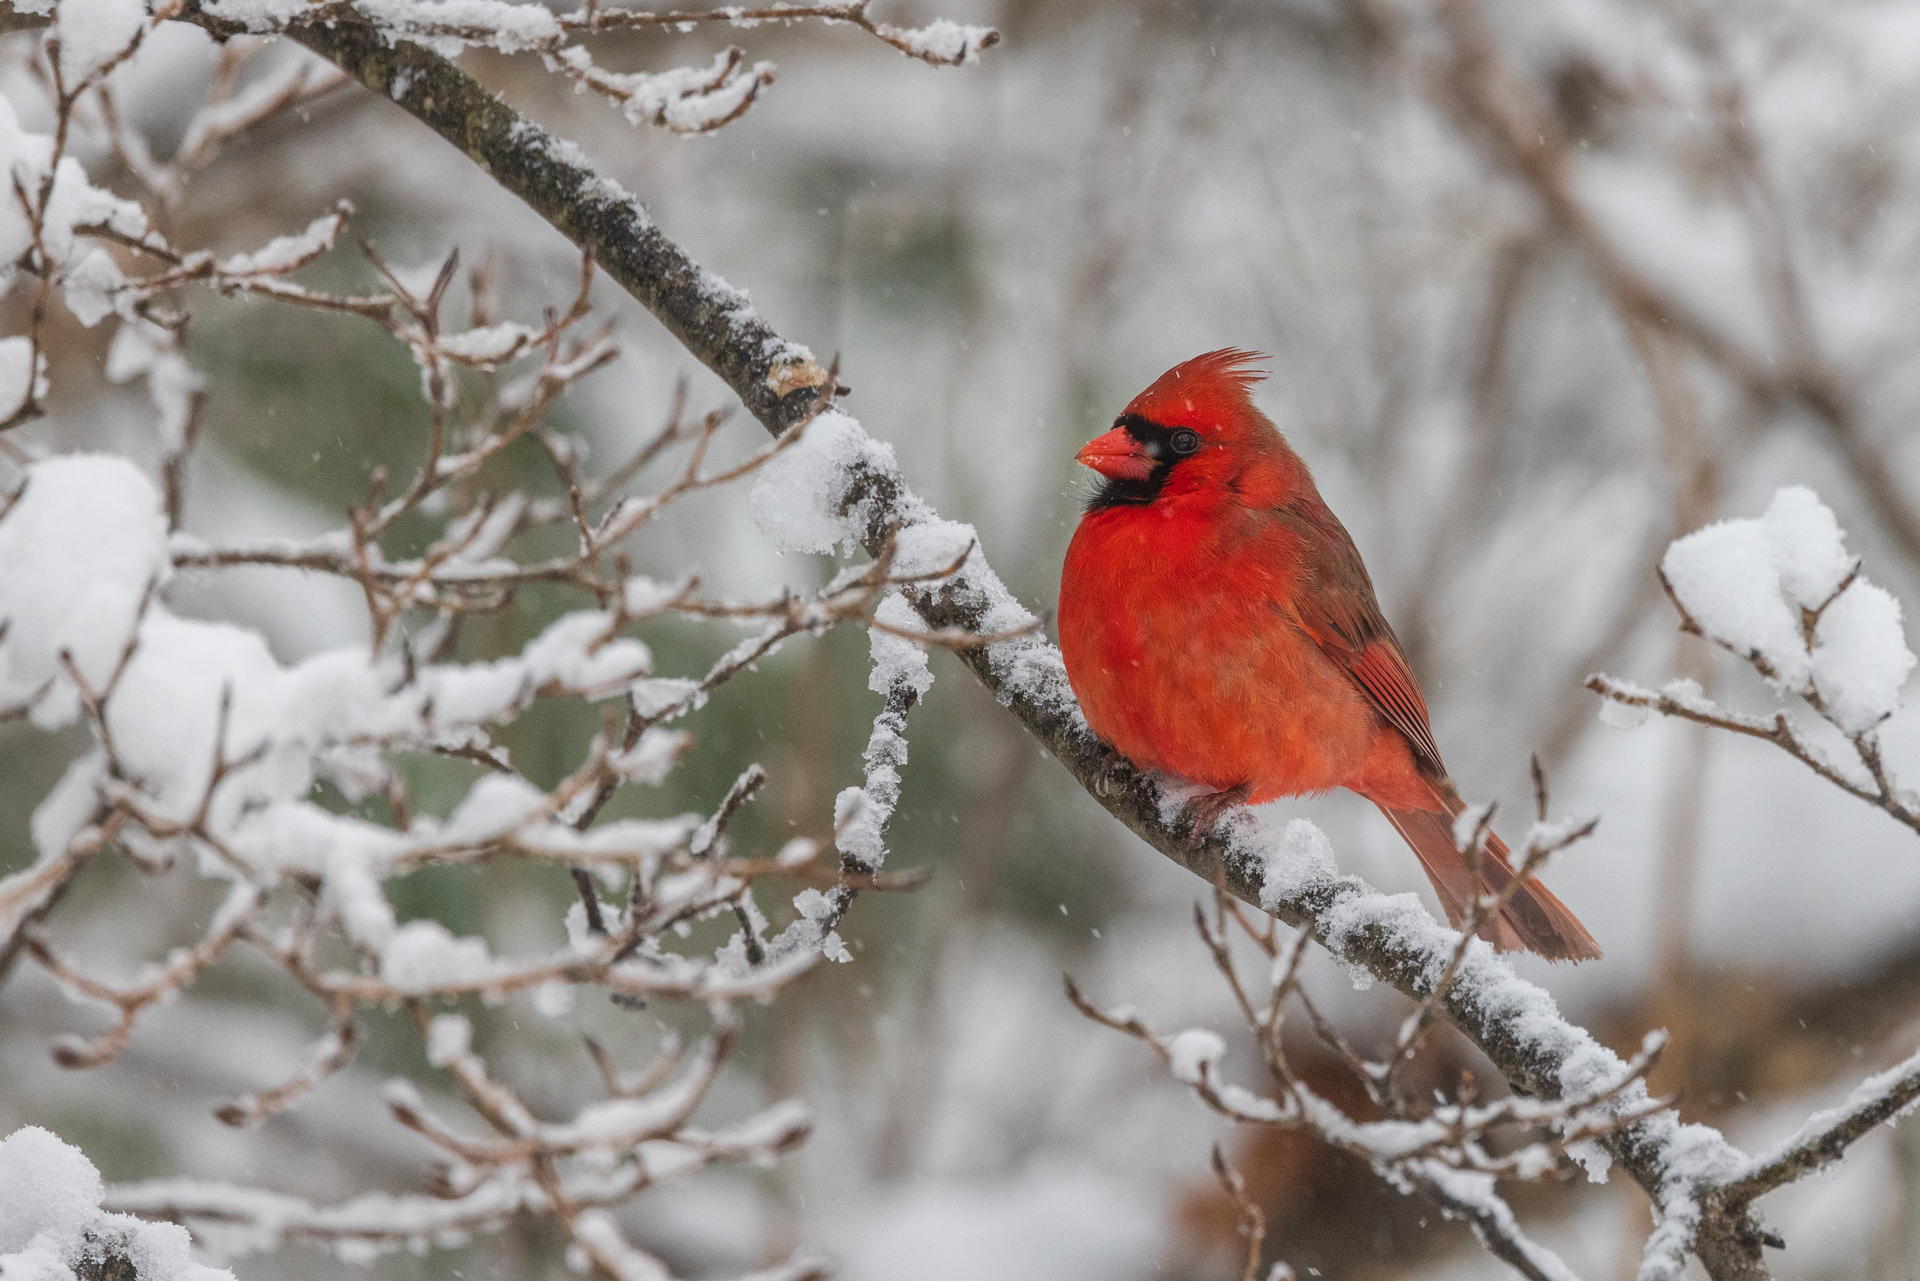 Northern Cardinal on snowy branch